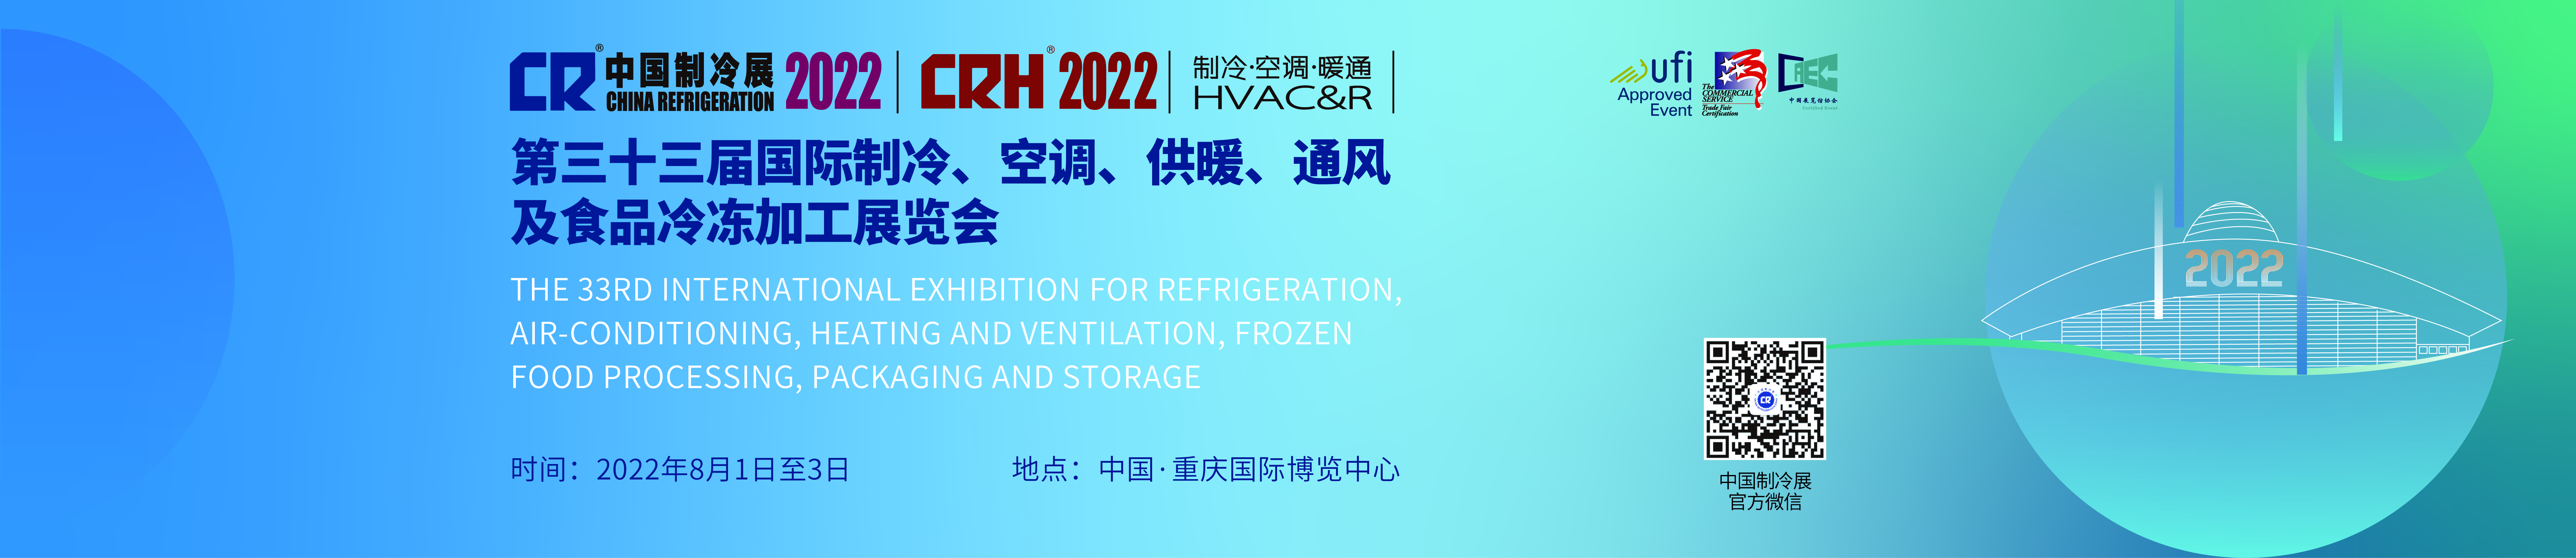 China refrigeration